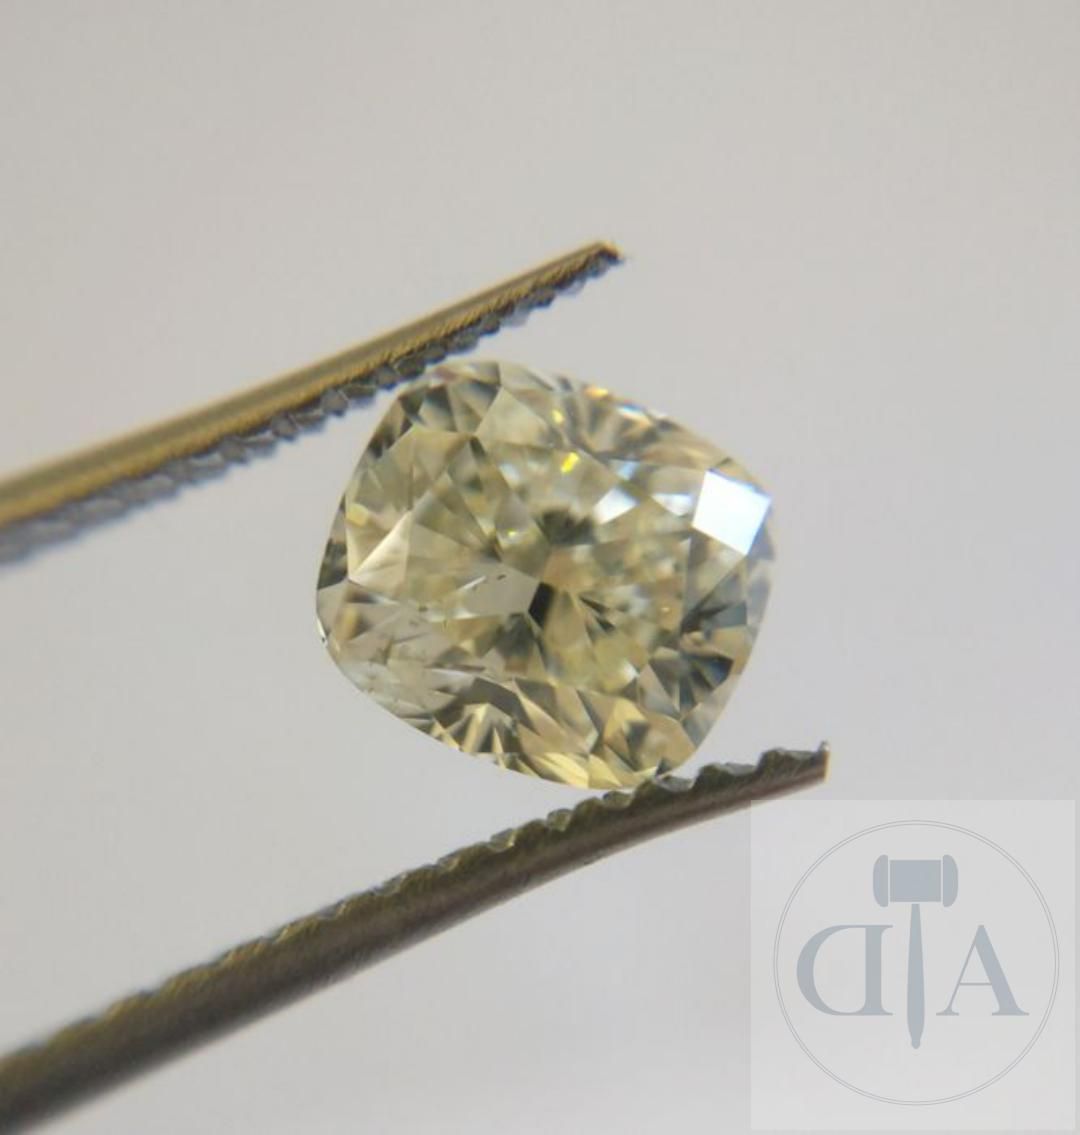 Null " Diamante 1.41ct Certificado GIA- Certificado GIA No. 1162789891 
- Forma:&hellip;